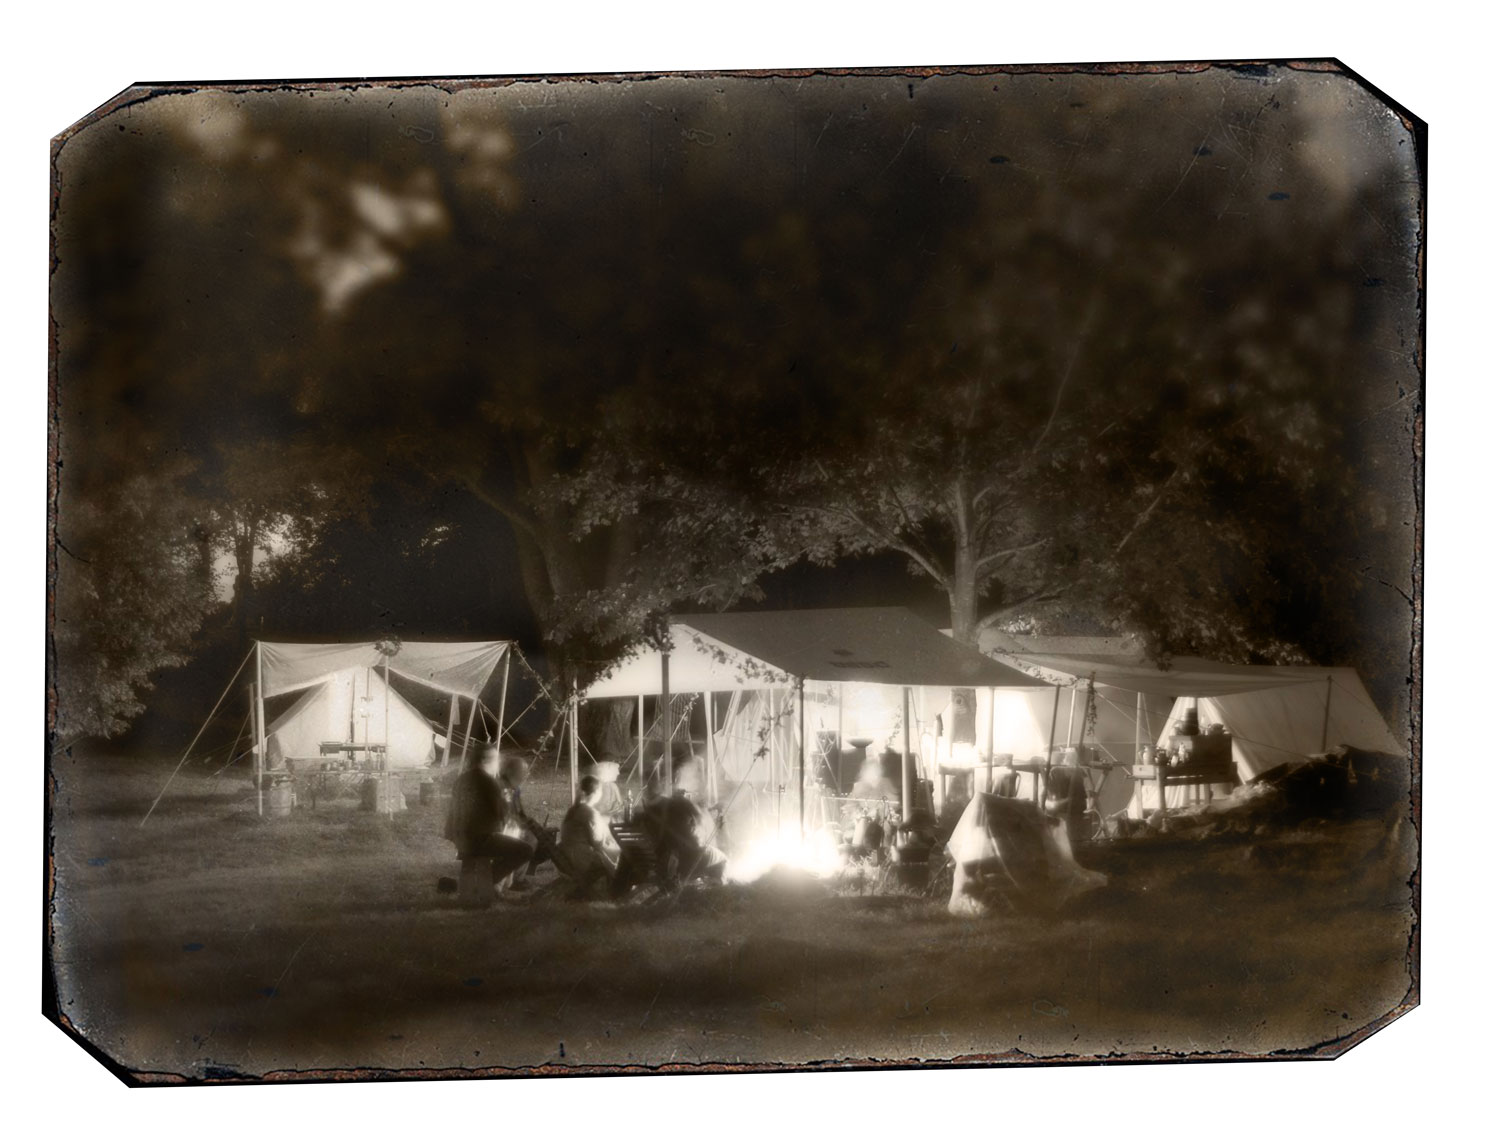 Civil War reenactors at Antietam: reenactors camping on the battlefield at night